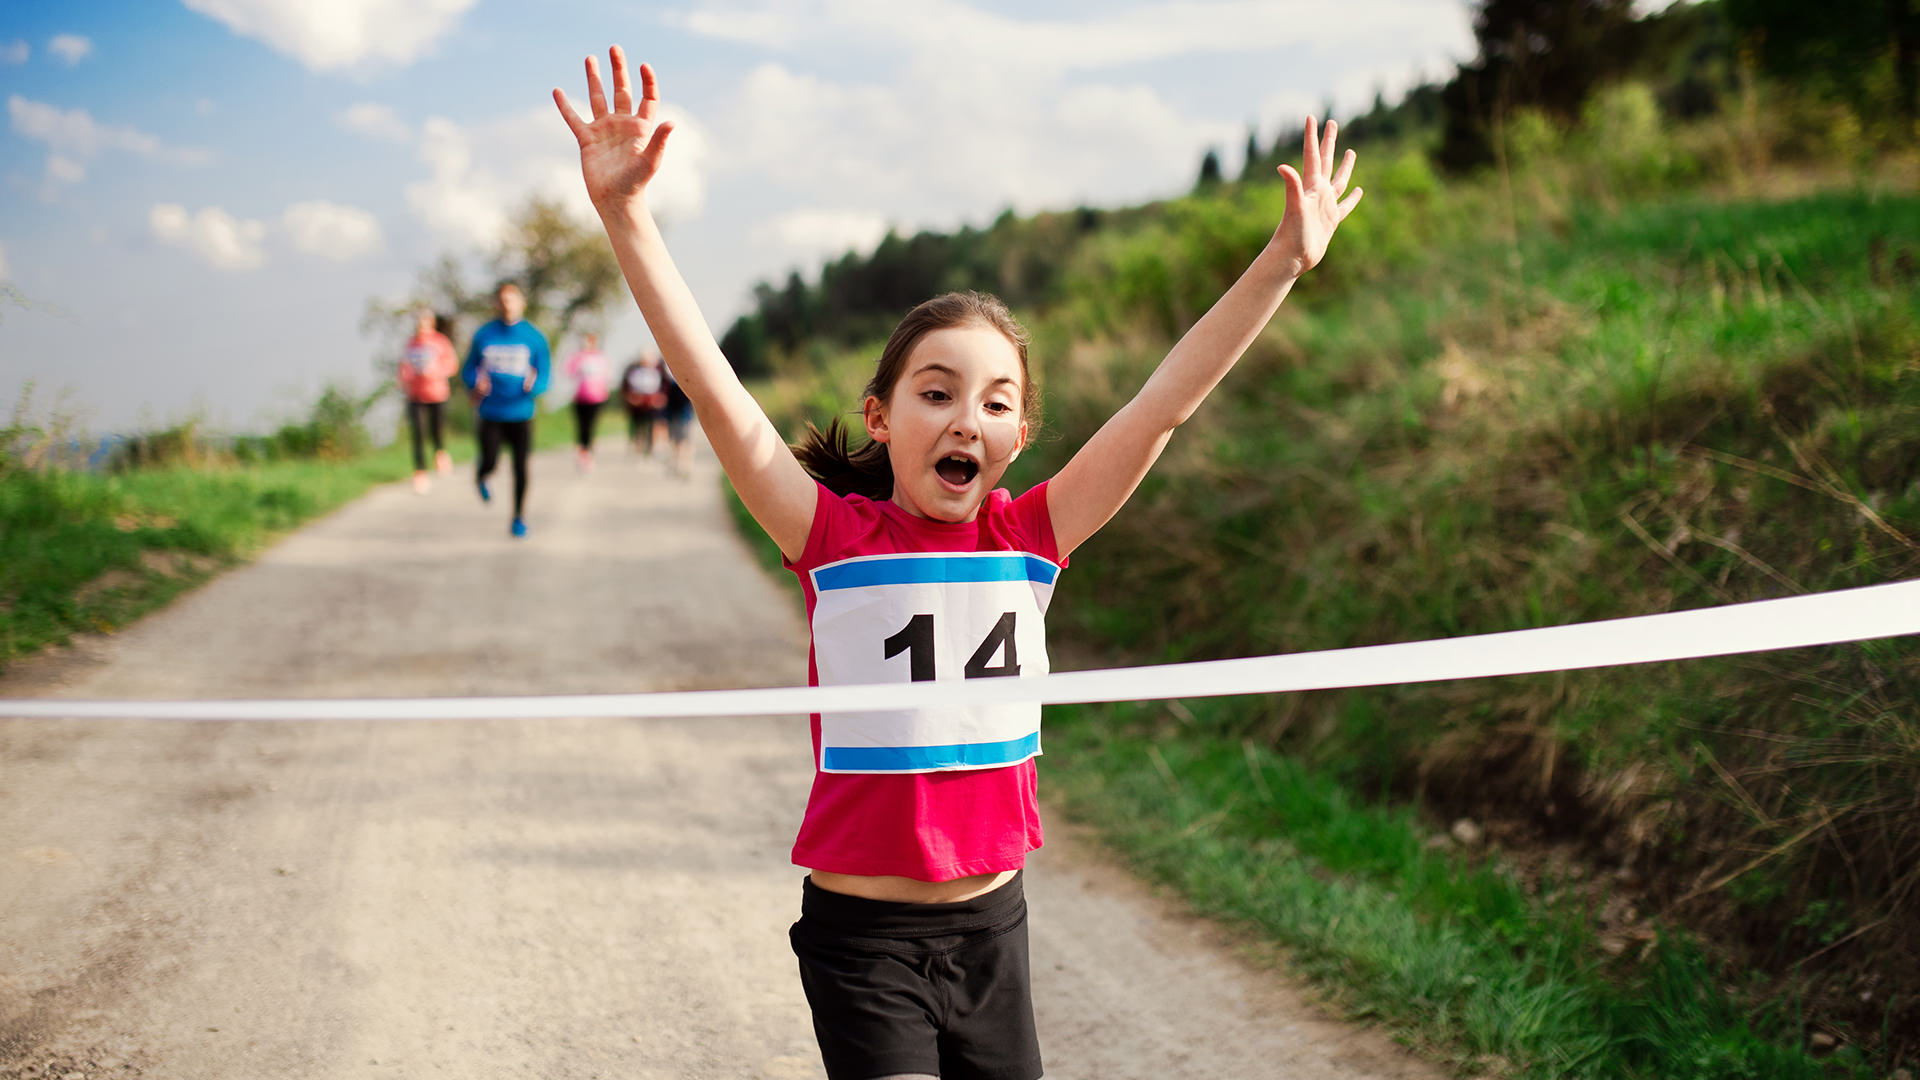 child winning running race